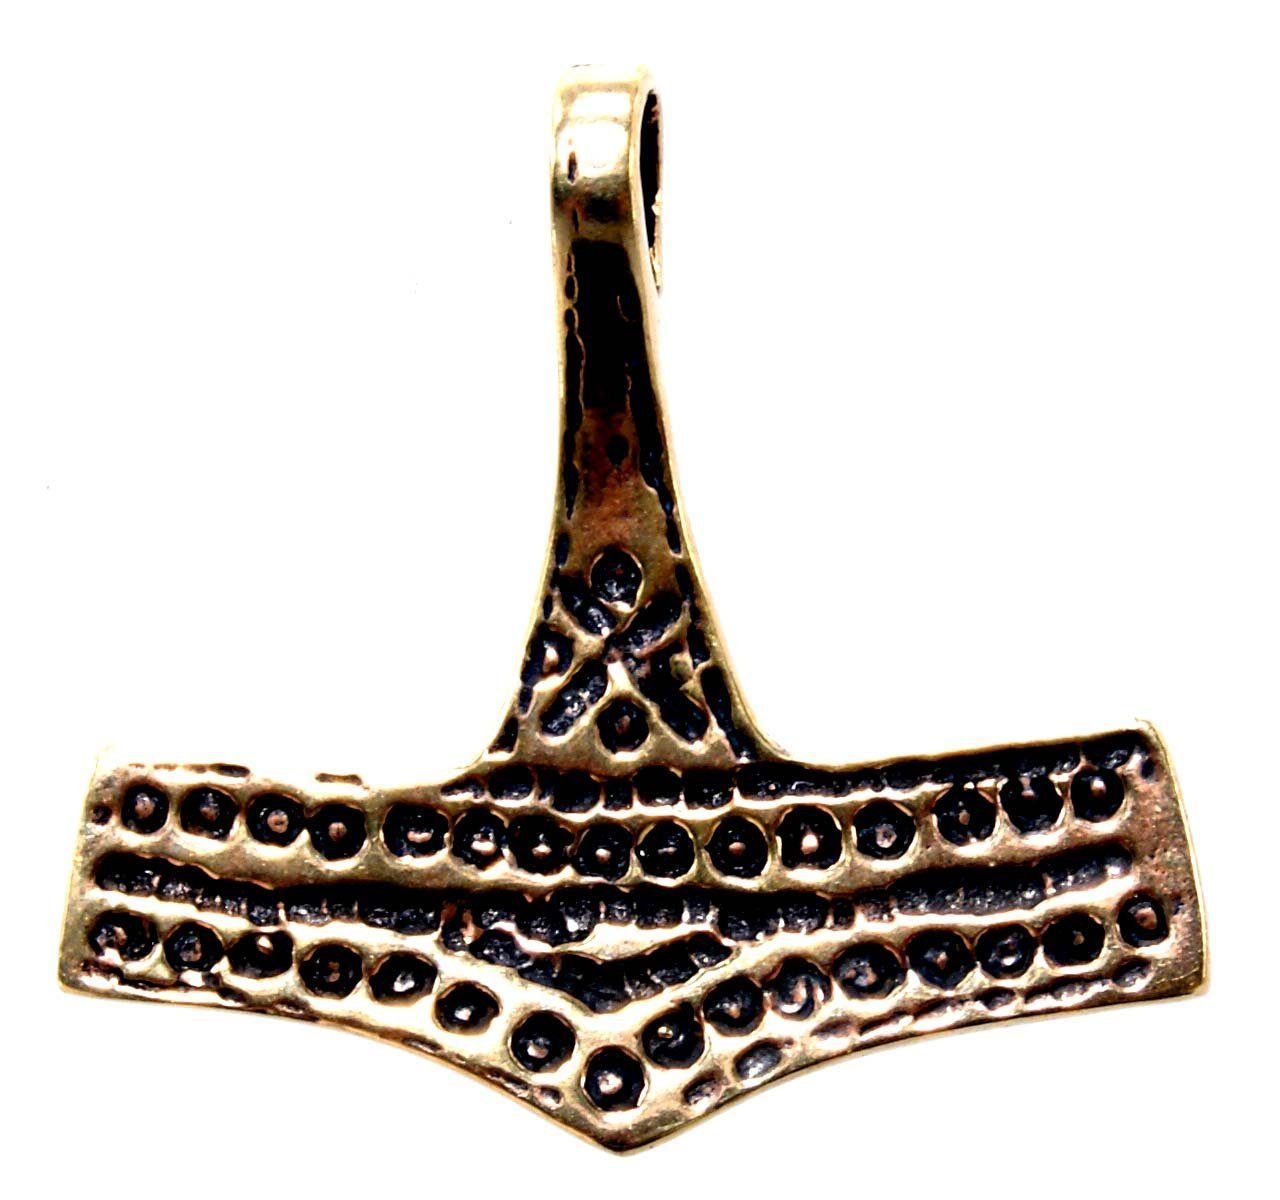 Thorhammer Kiss Romersdal Thorshammer Leather Kettenanhänger of Bronze Anhänger Odin Thor